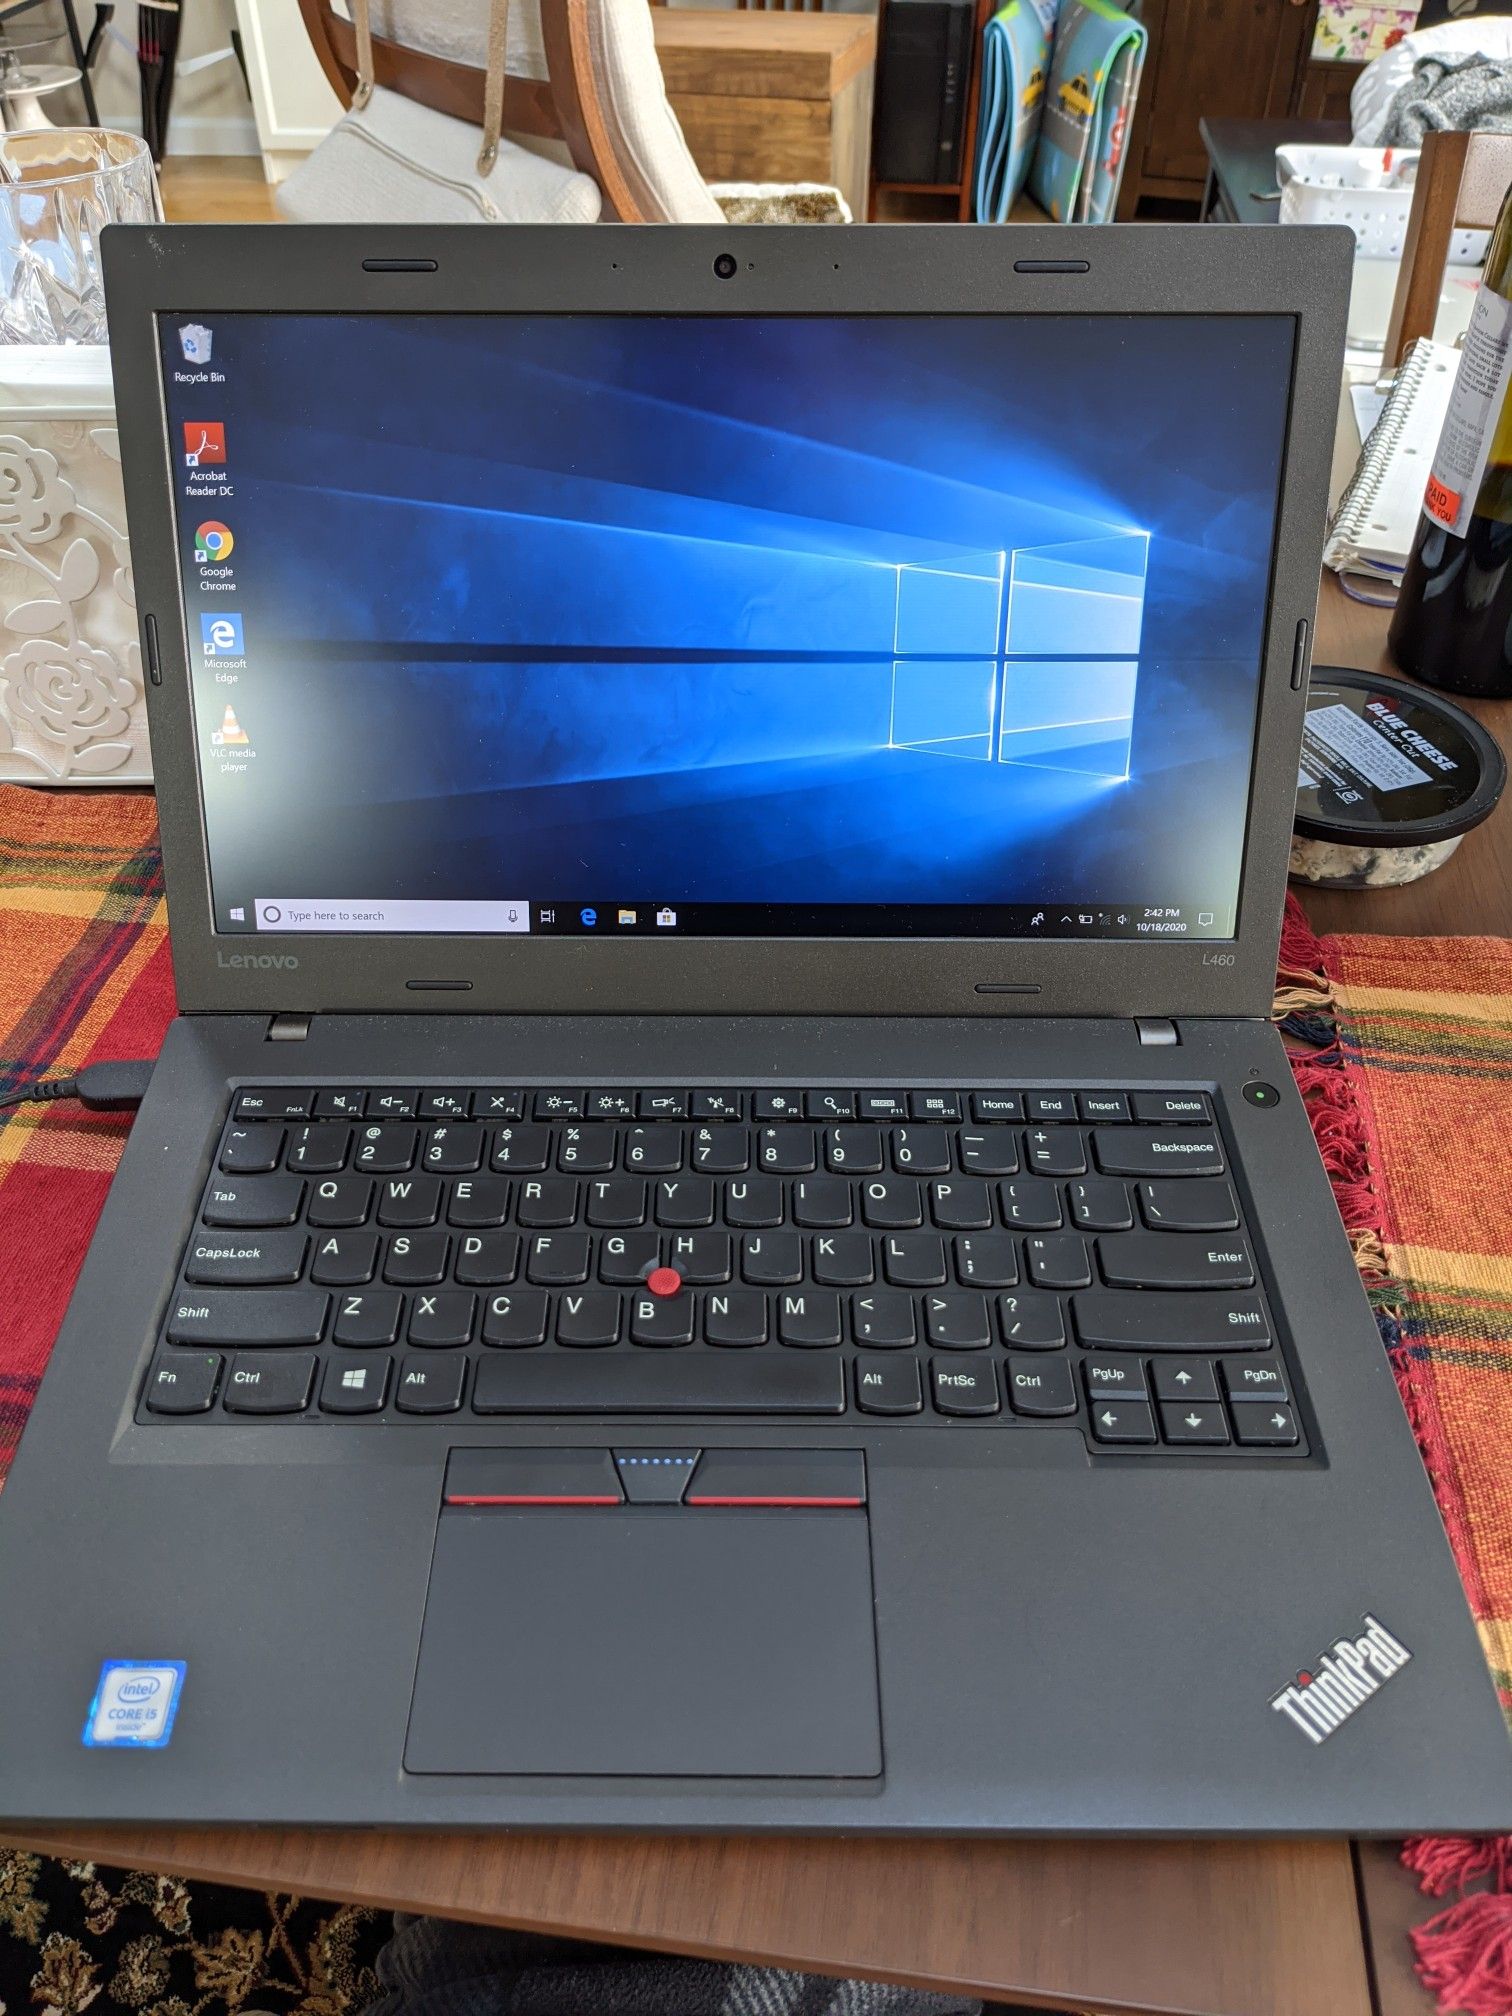 Lenovo L460 i5 laptop